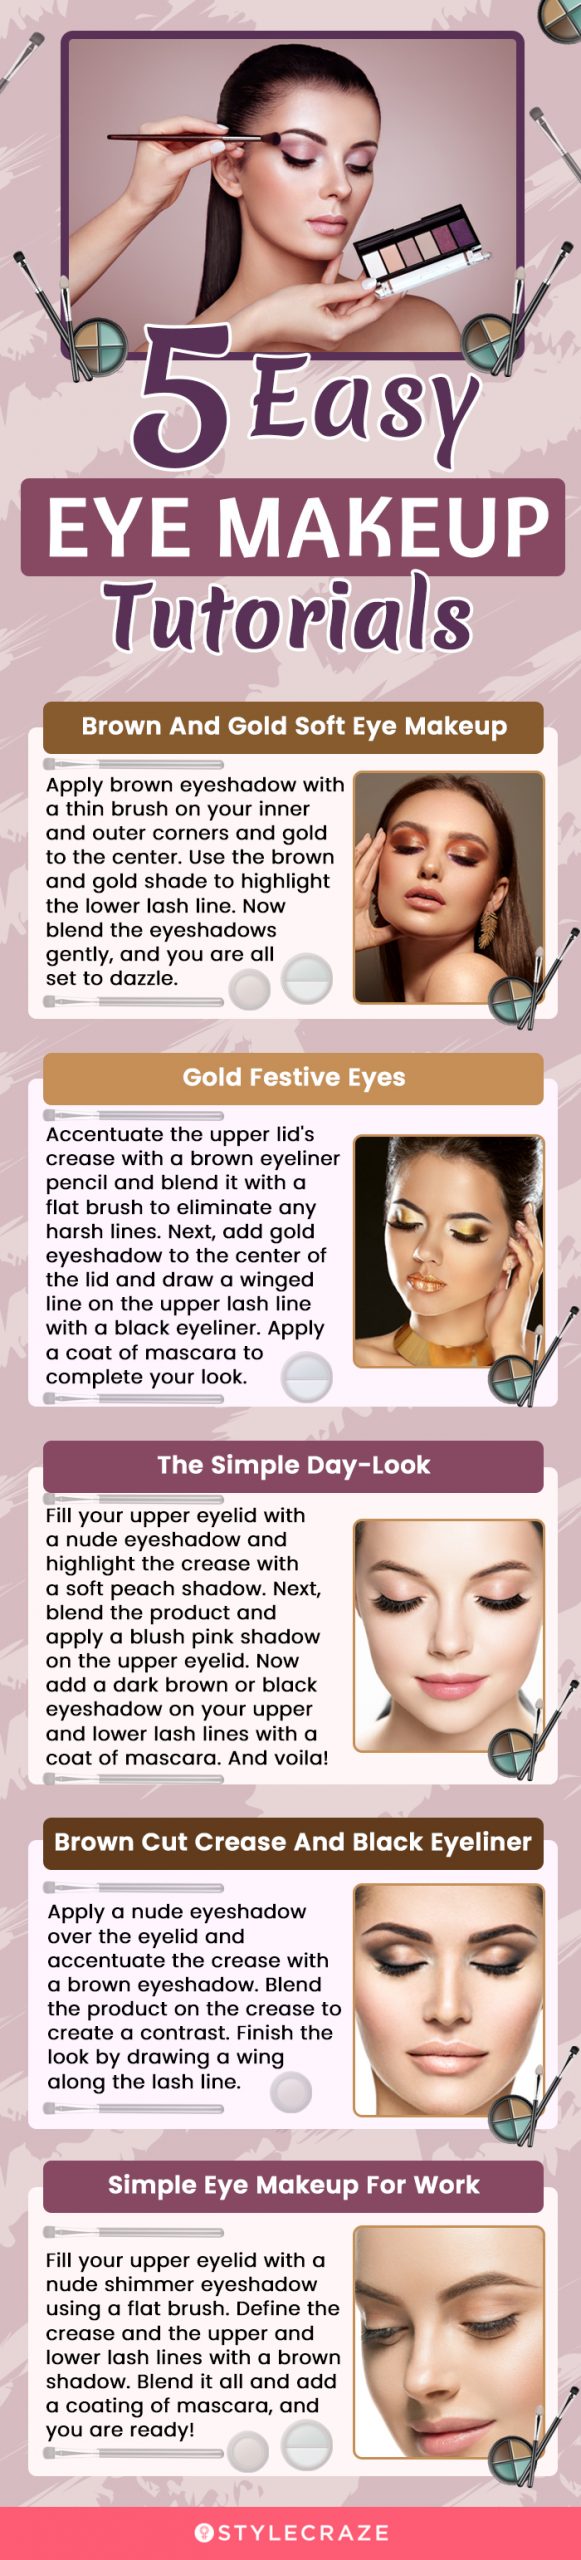 5 easy eye makeup tutorials [infographic]